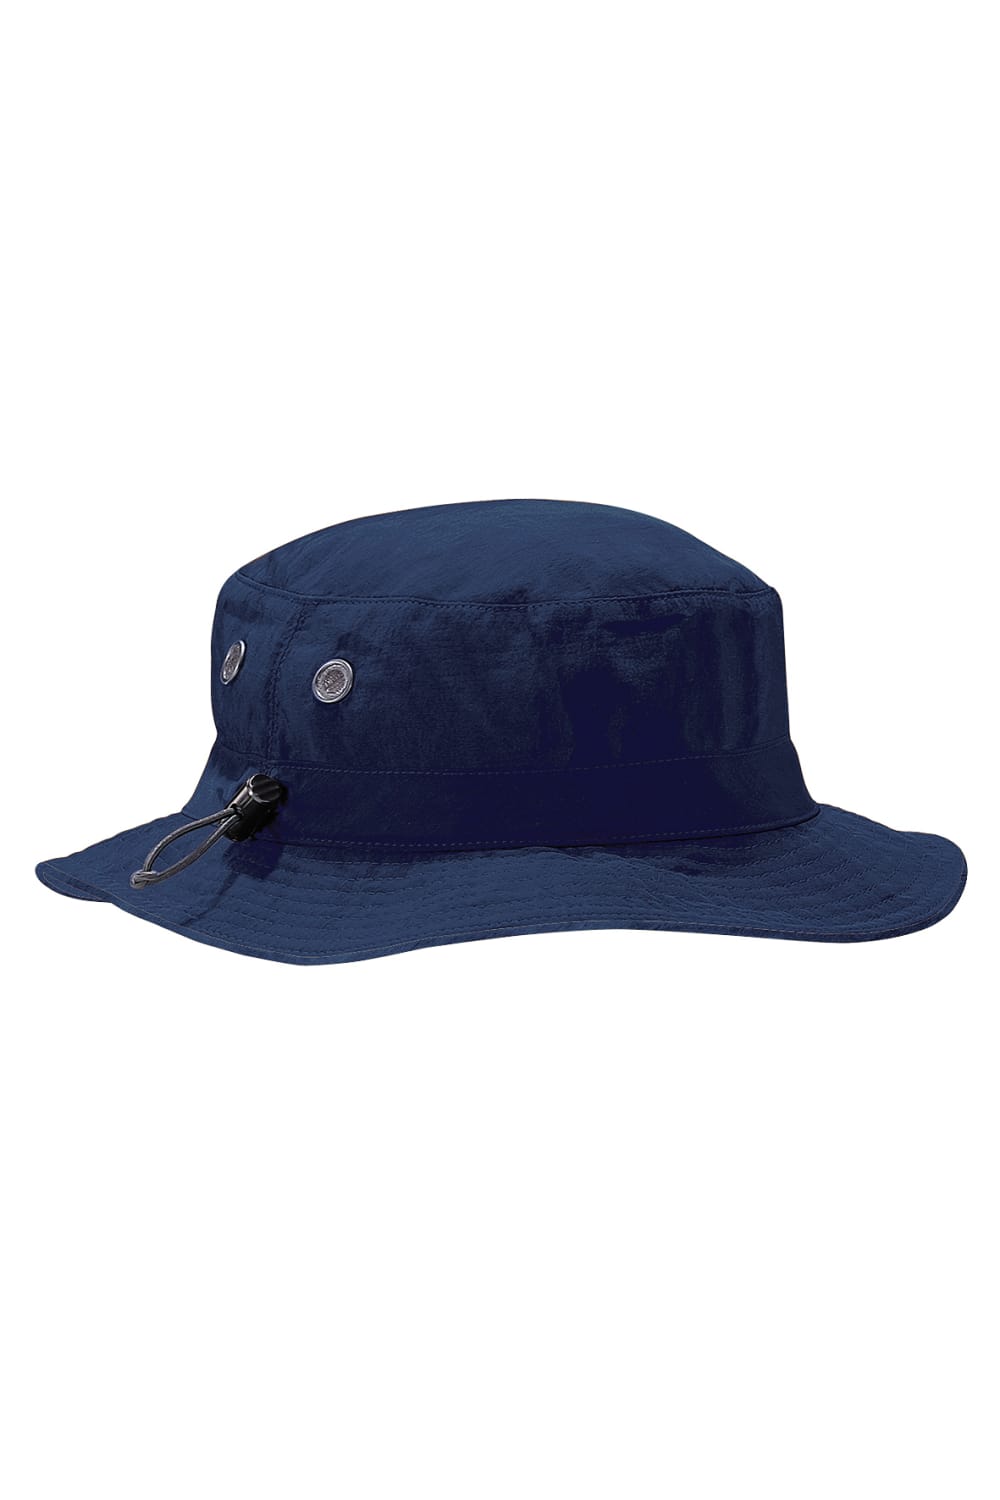 Summer Cargo Bucket Hat/Headwear (UPF50 Protection) - Navy